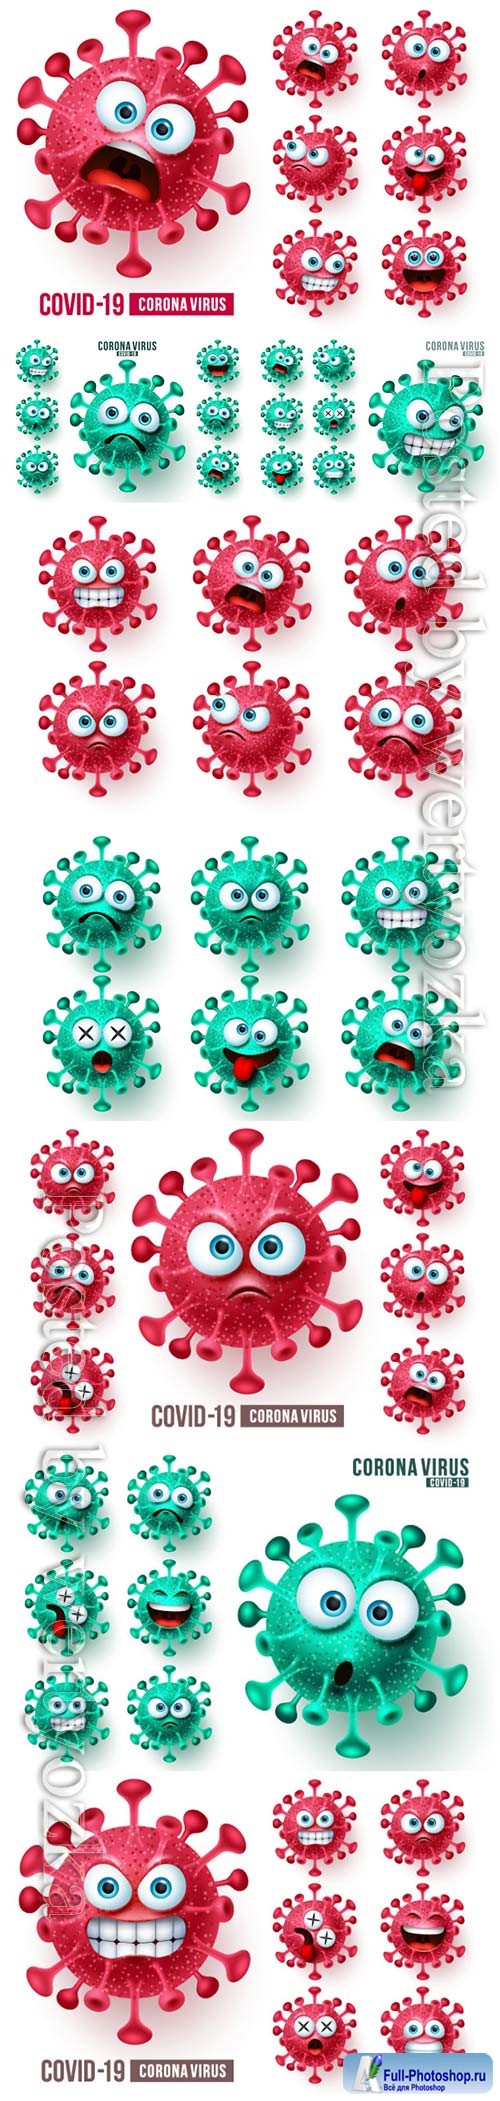 Corona virus emoticons vector set